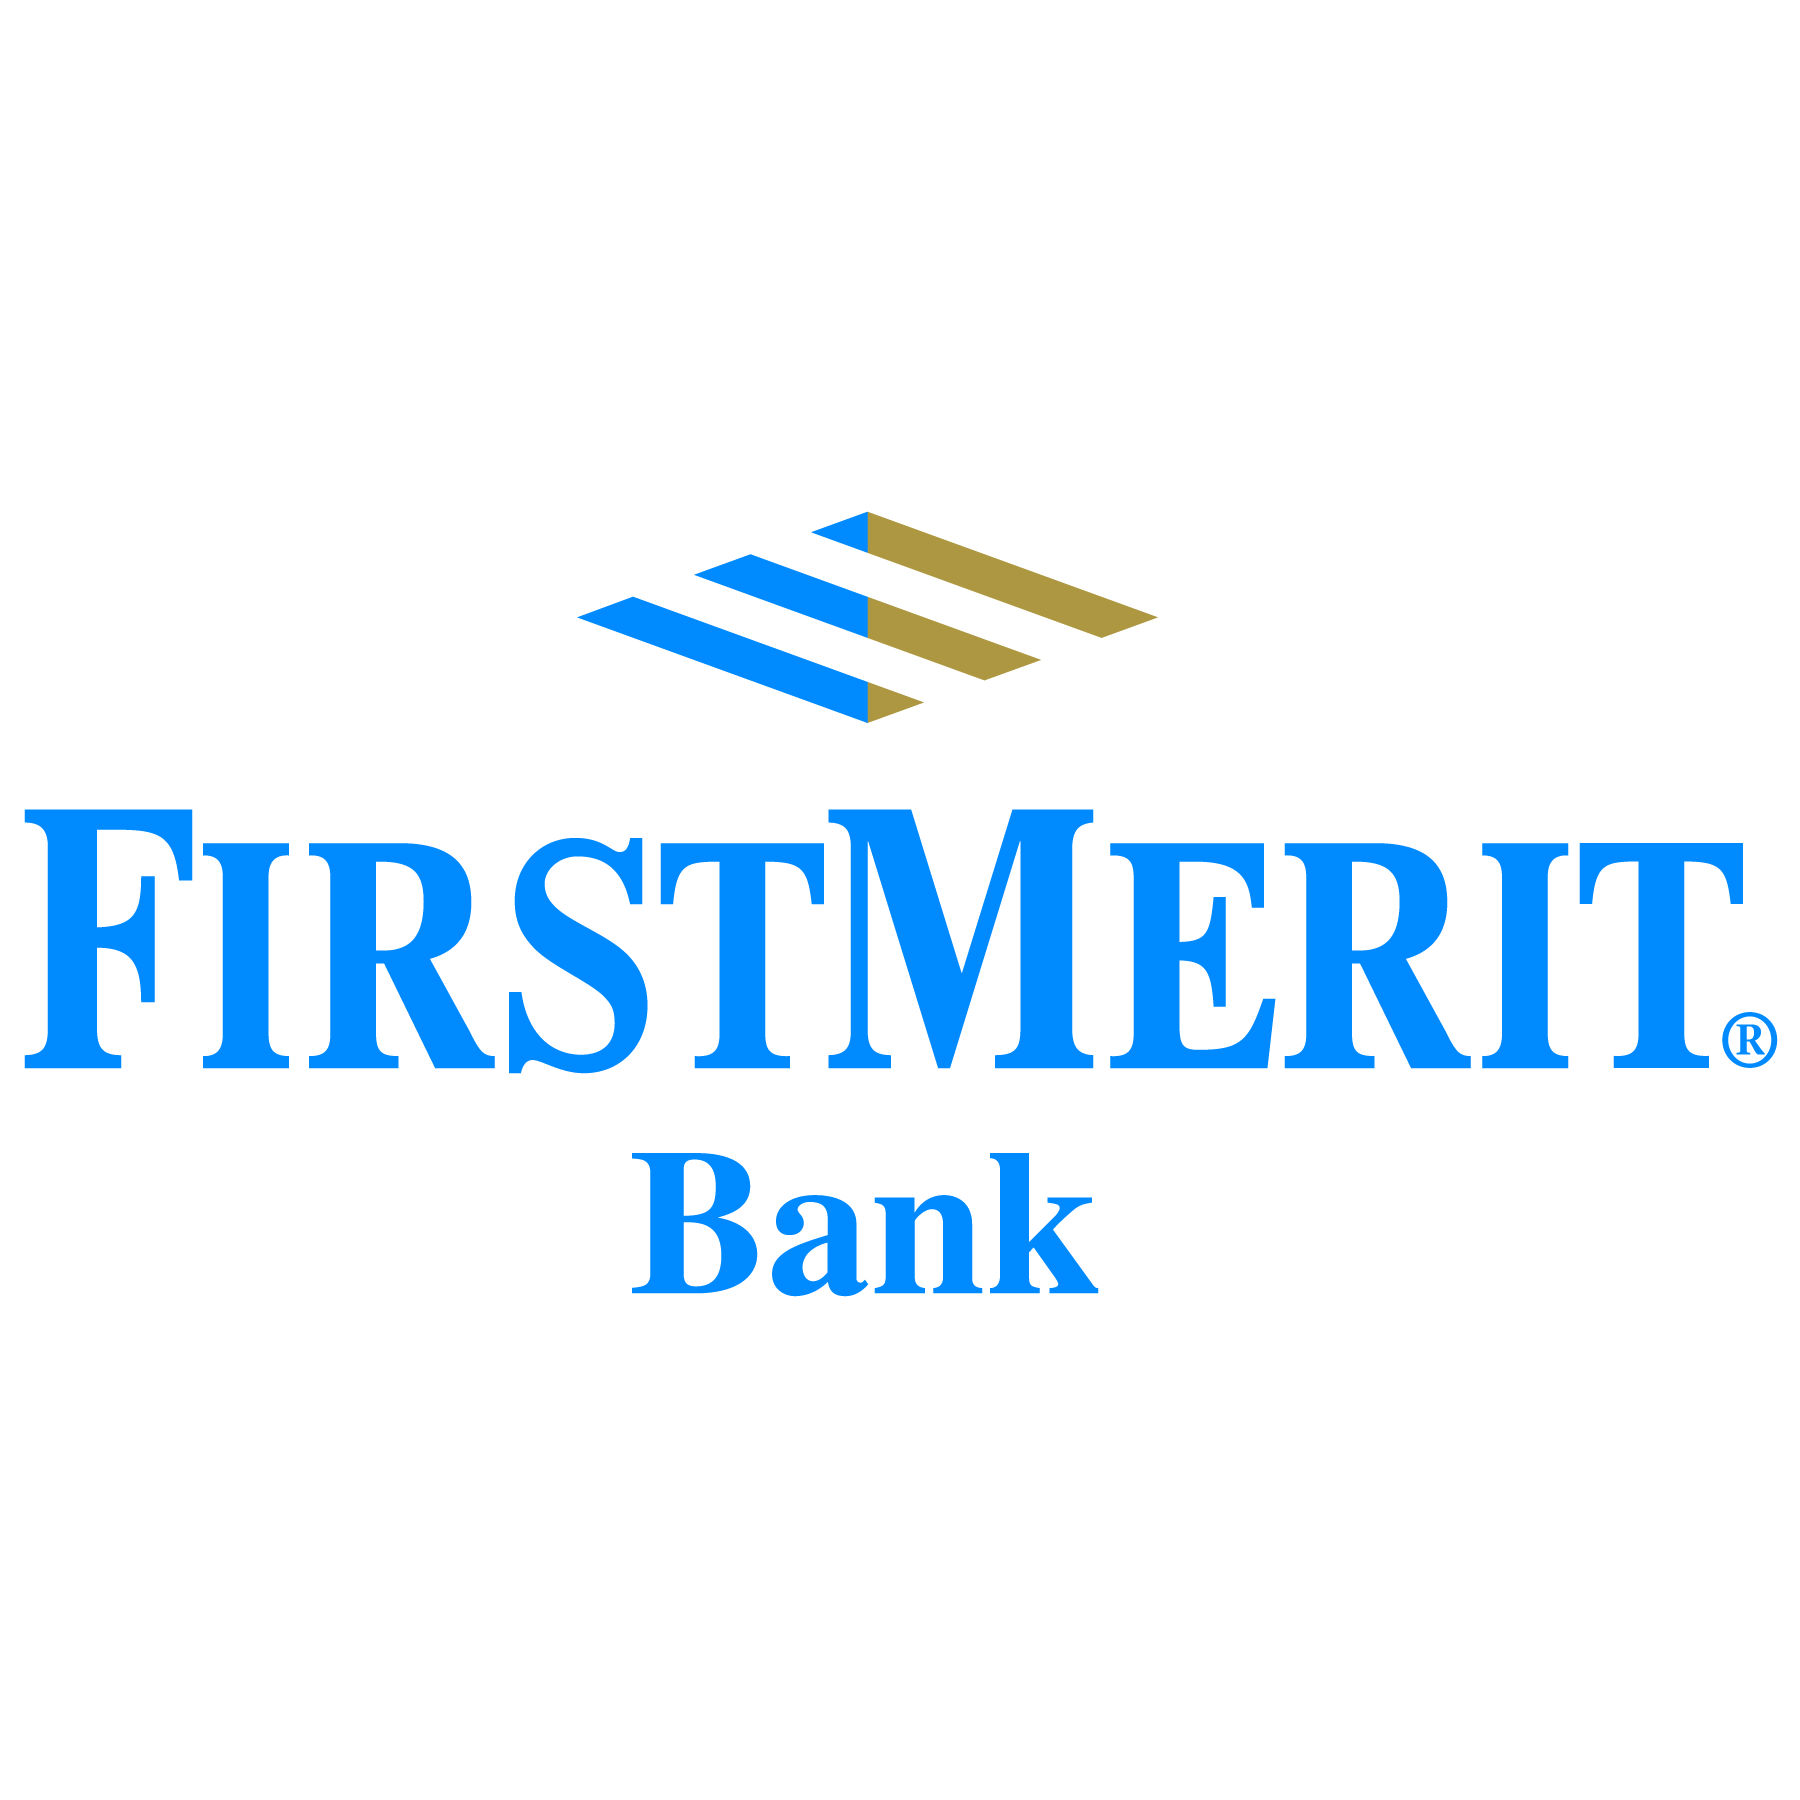 FirstMerit Corporation Brand Logo